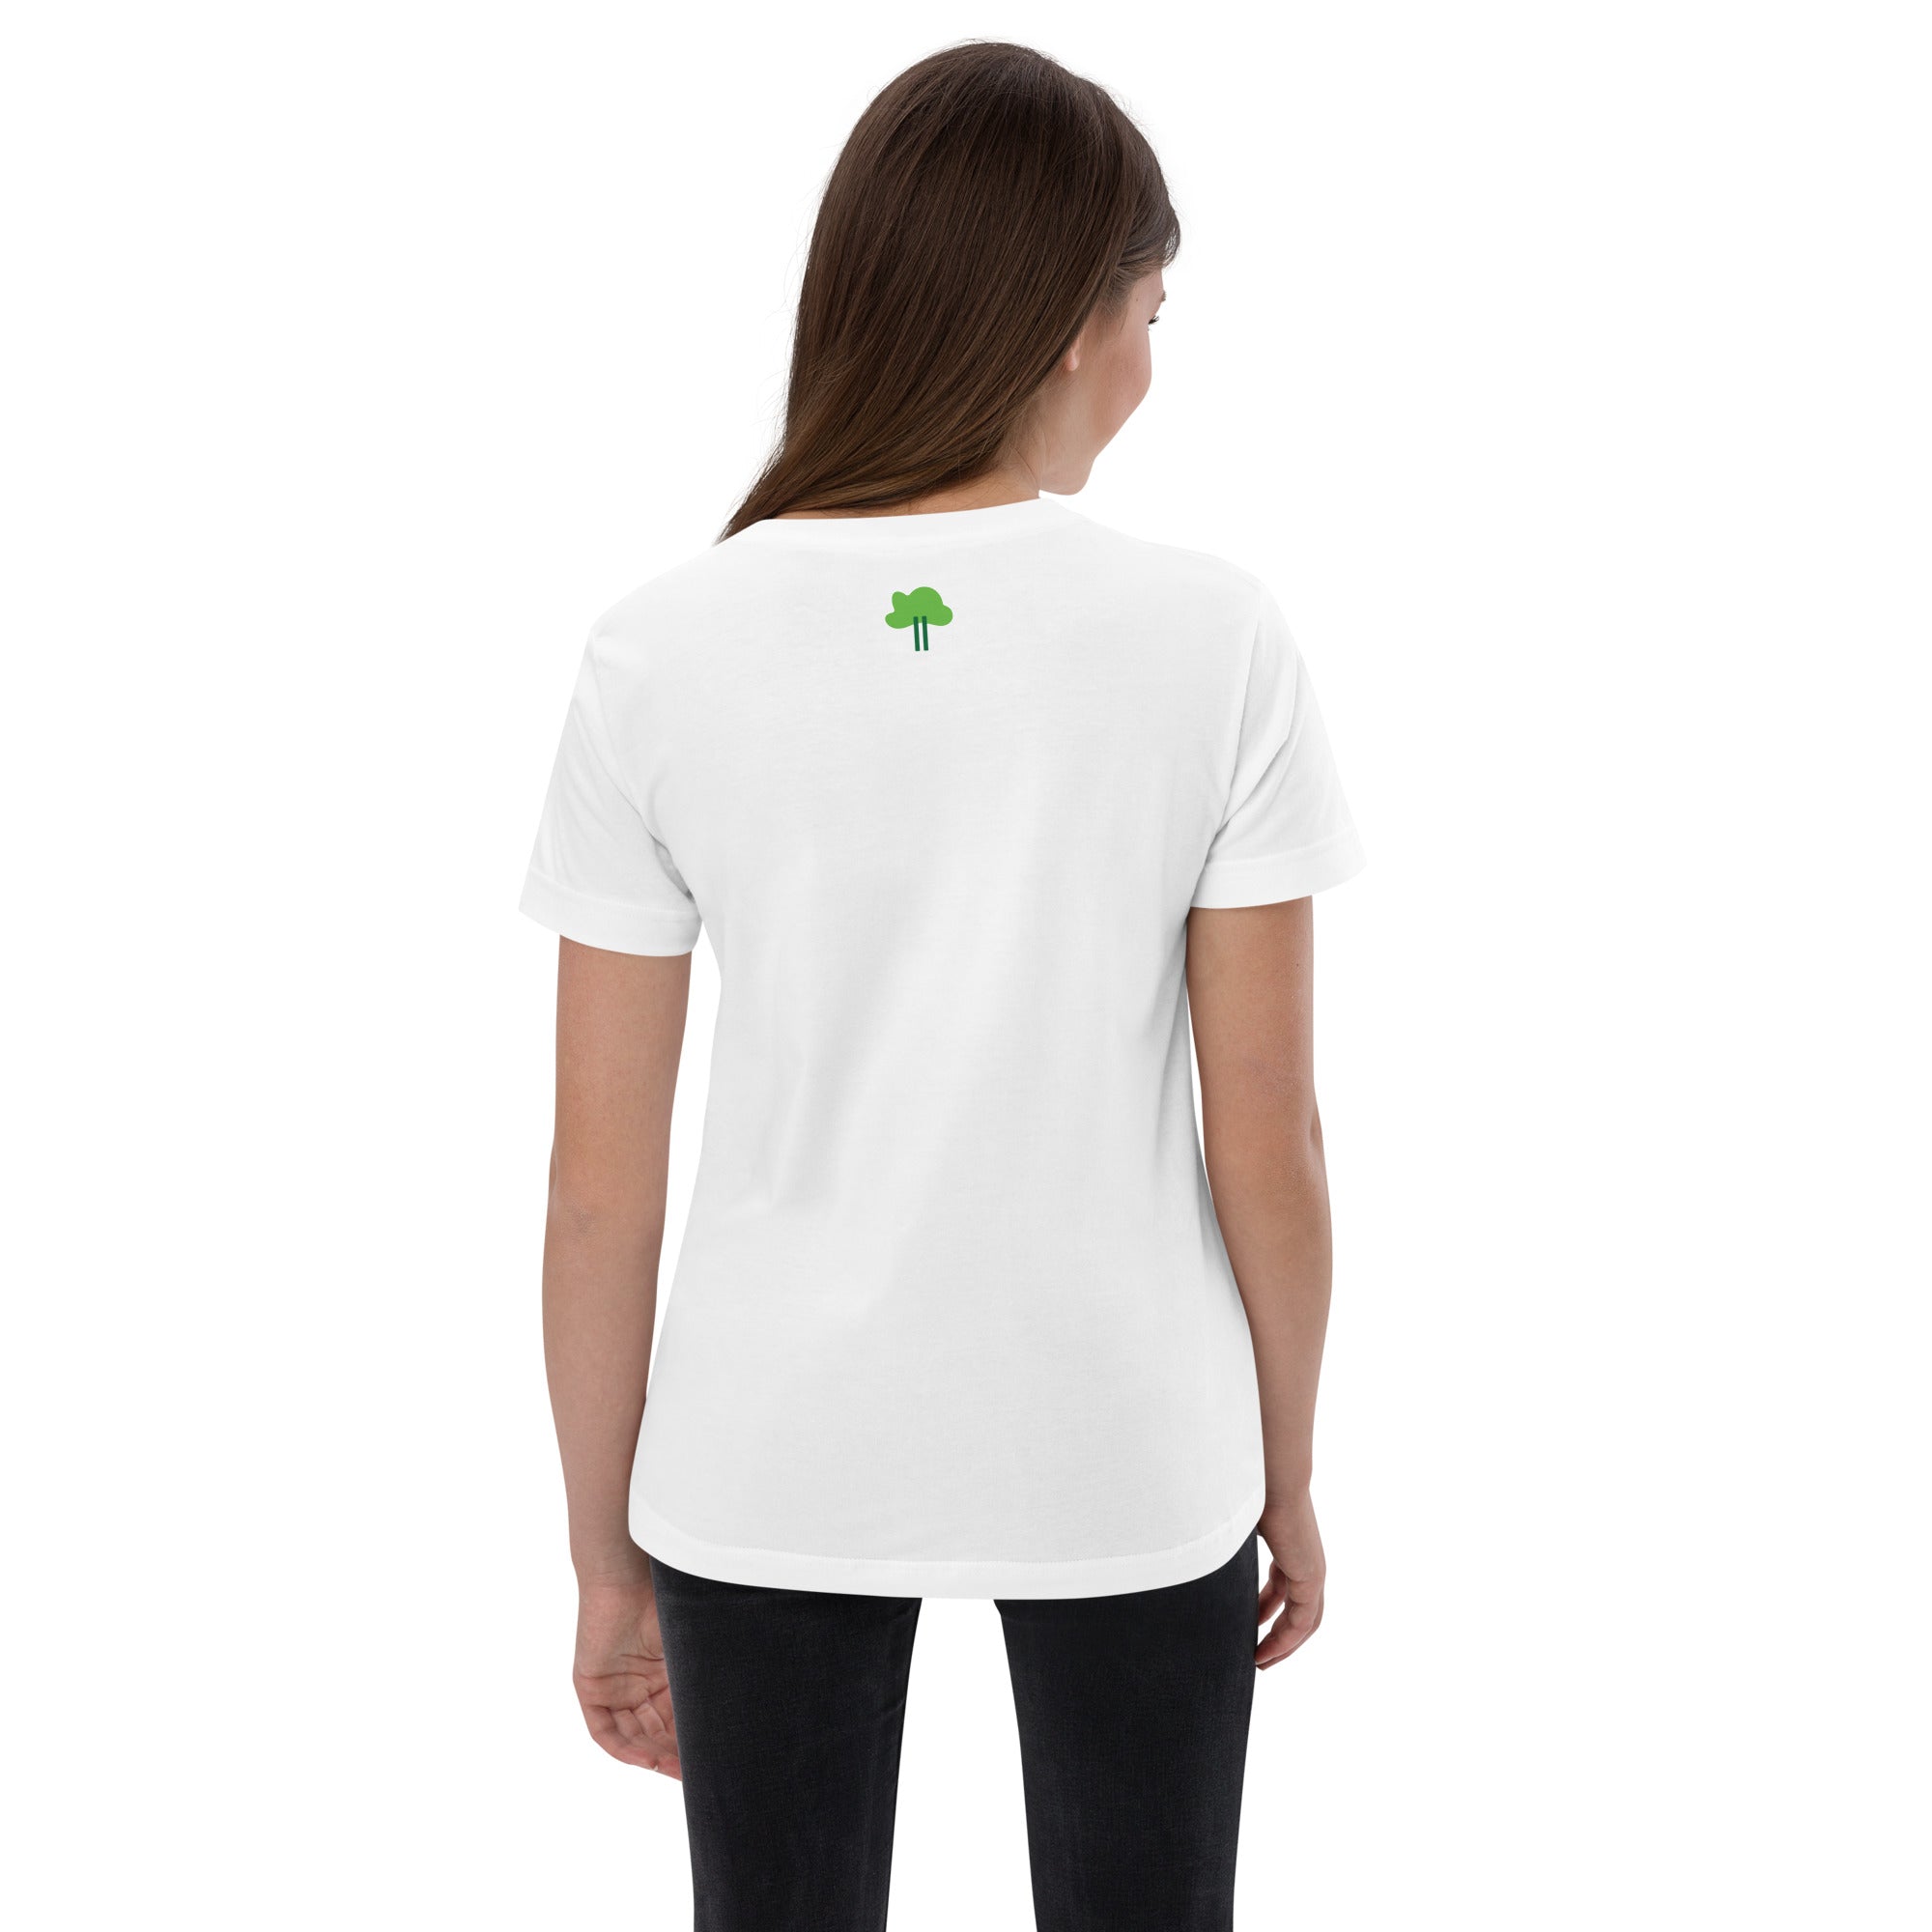 II Temp - Sabana - K1 | Youth jersey t-shirt